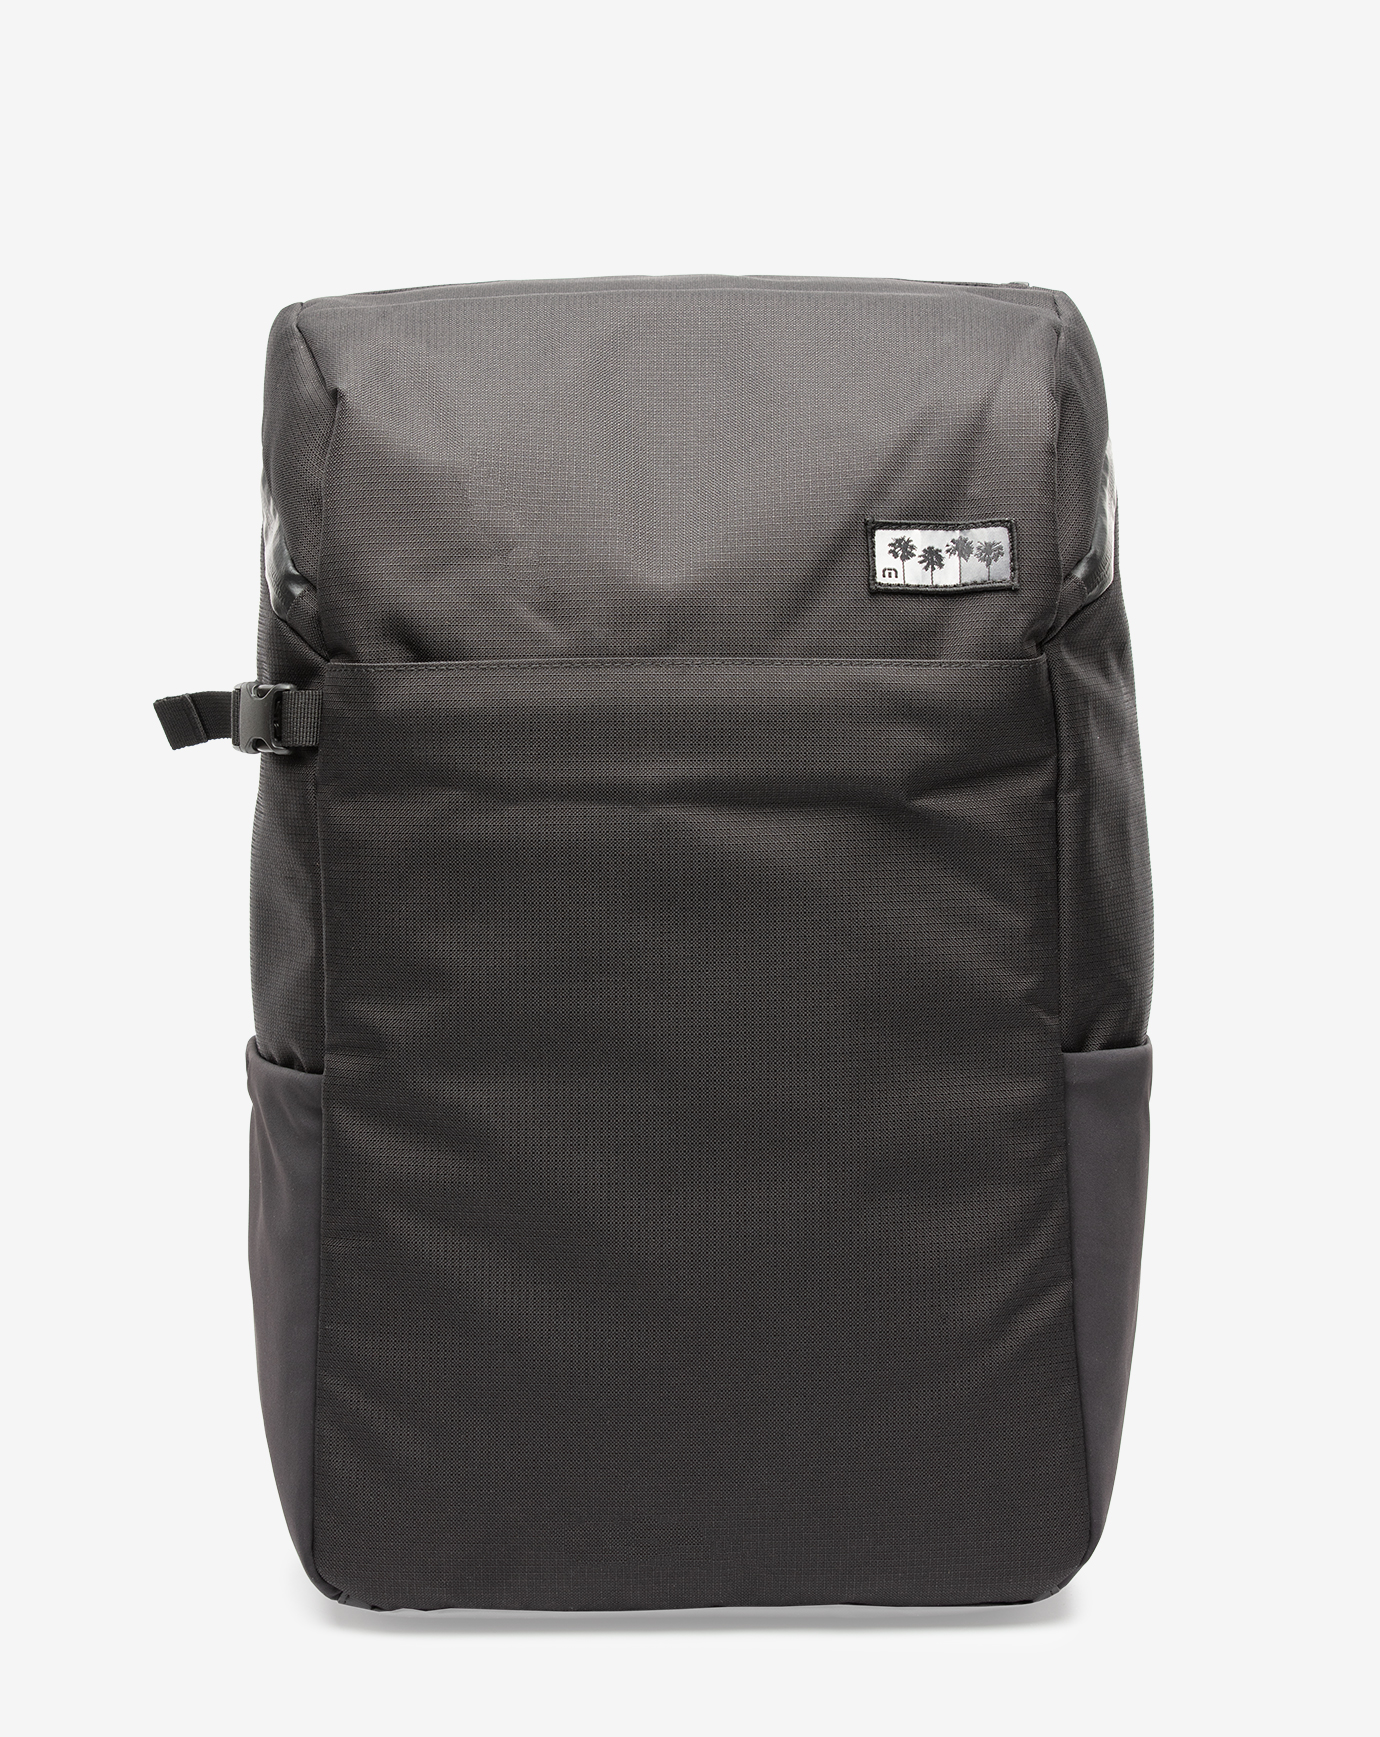 The New Originals Laptop Bag Men Messenger & Crossbody Bags Black in size:ONE Size